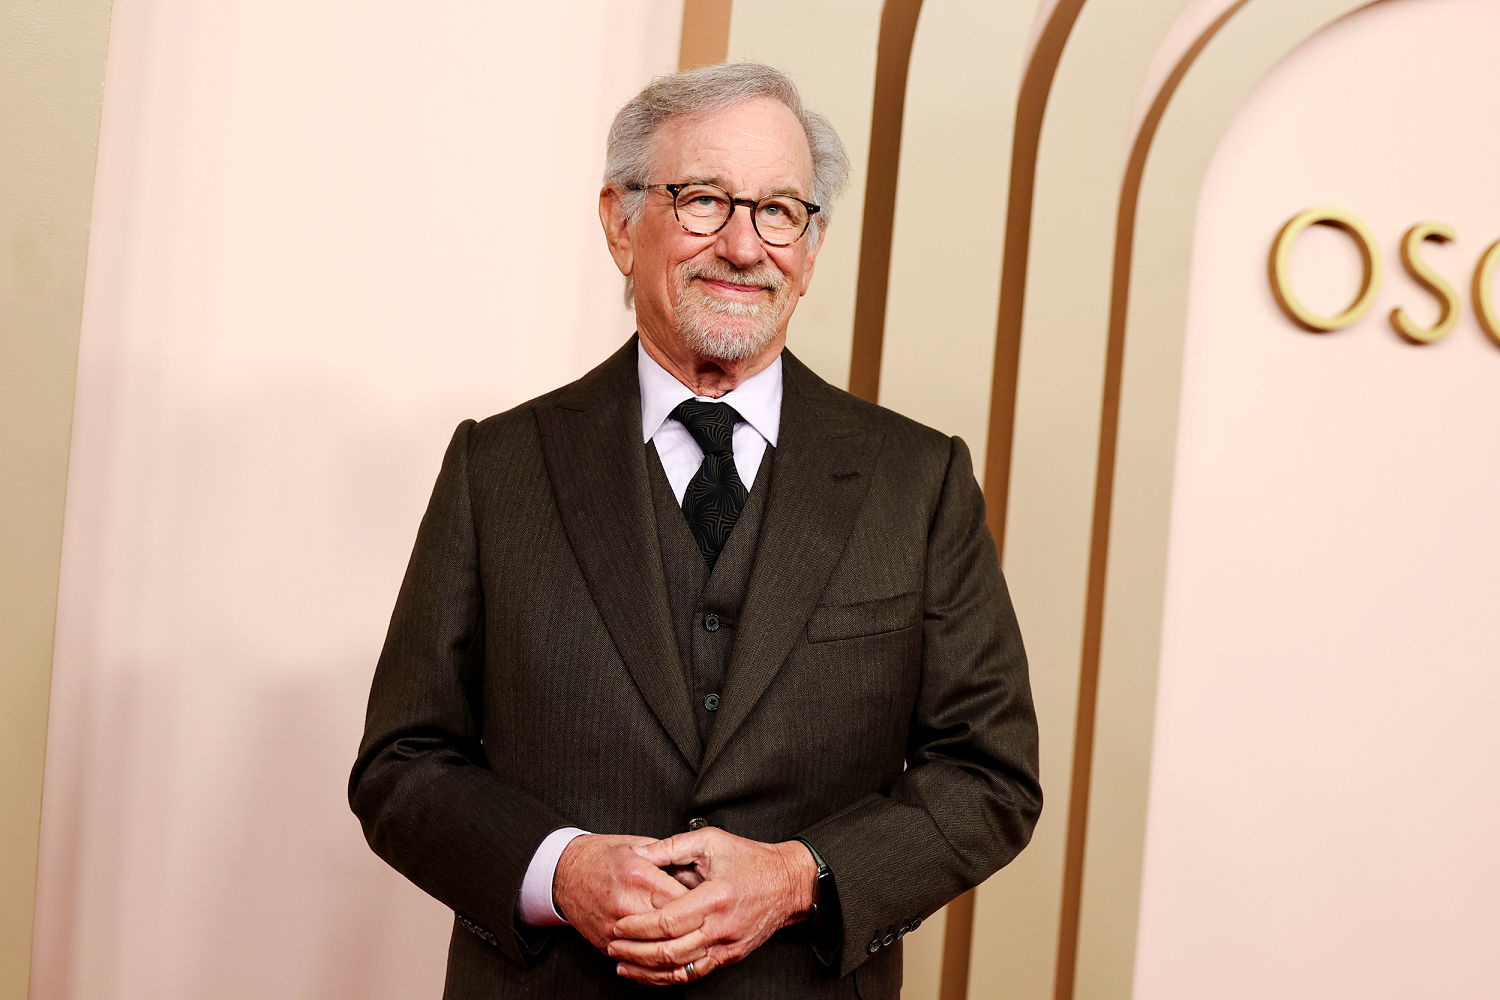 Steven Spielberg’s latest project: Providing strategy for the Biden campaign